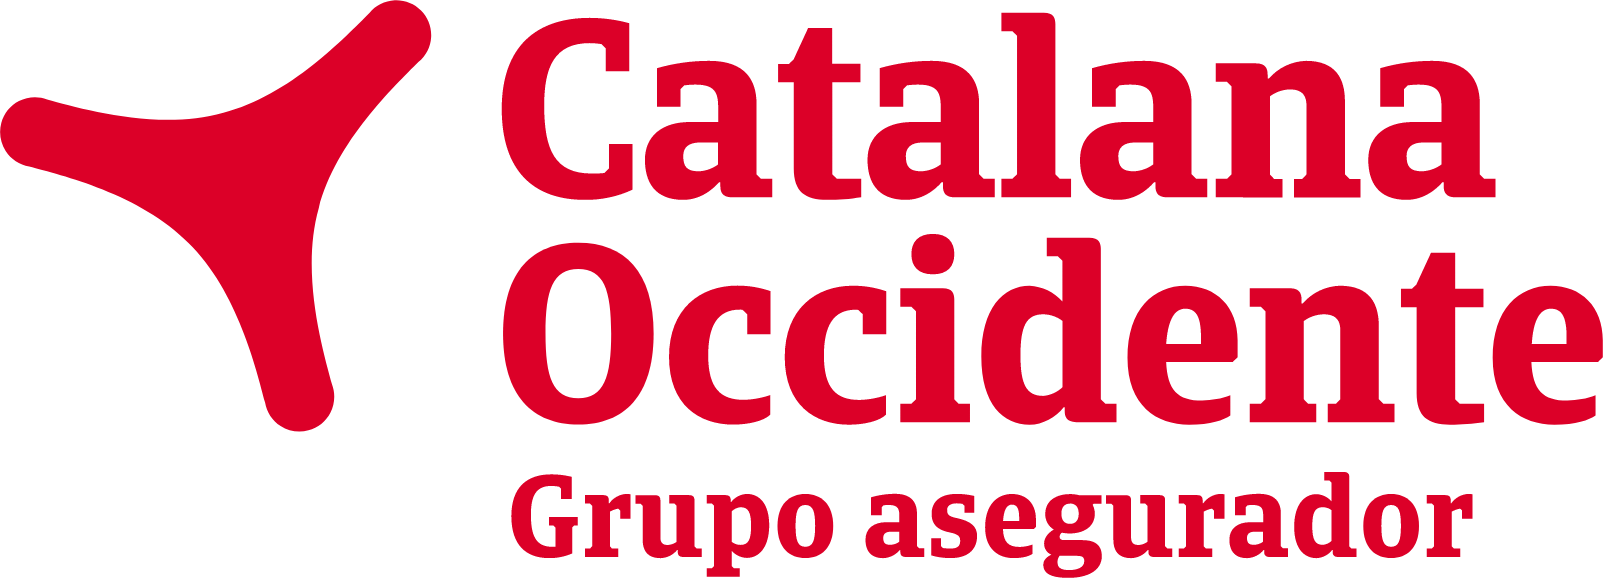 Grupo Catalana Occidente logo large (transparent PNG)